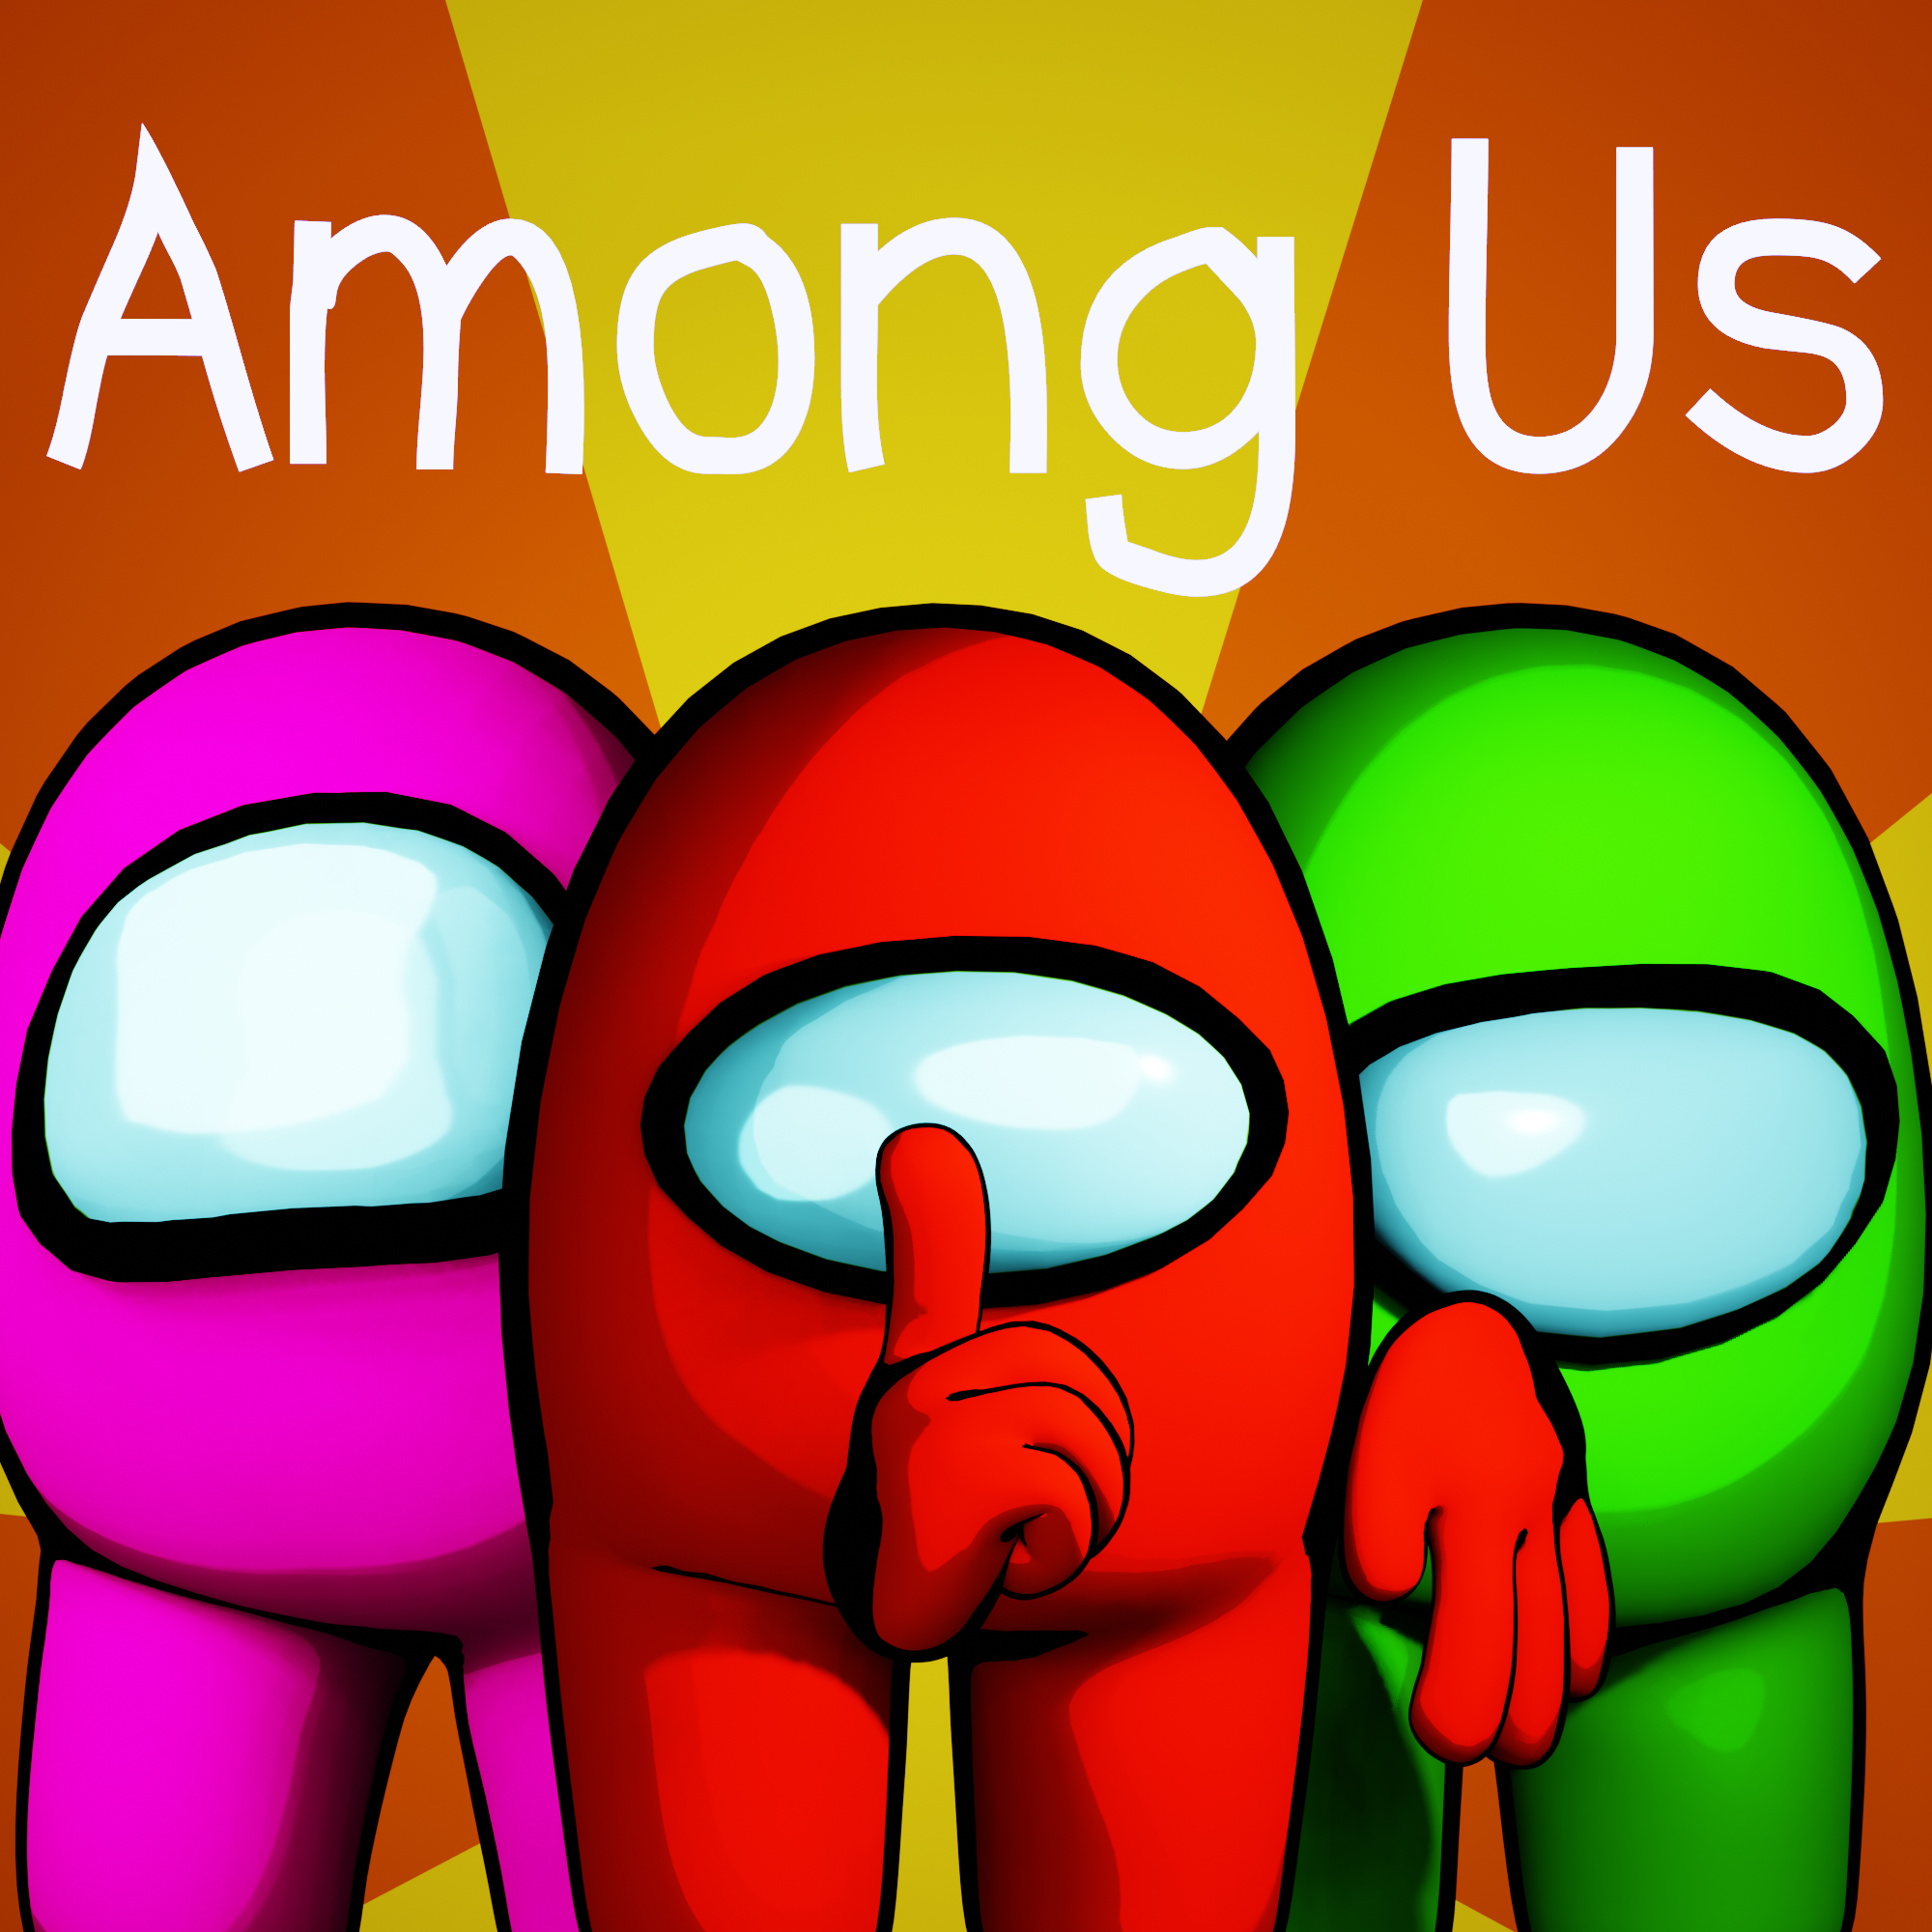 Among-Us-Mod-Menu by amongusmod on DeviantArt